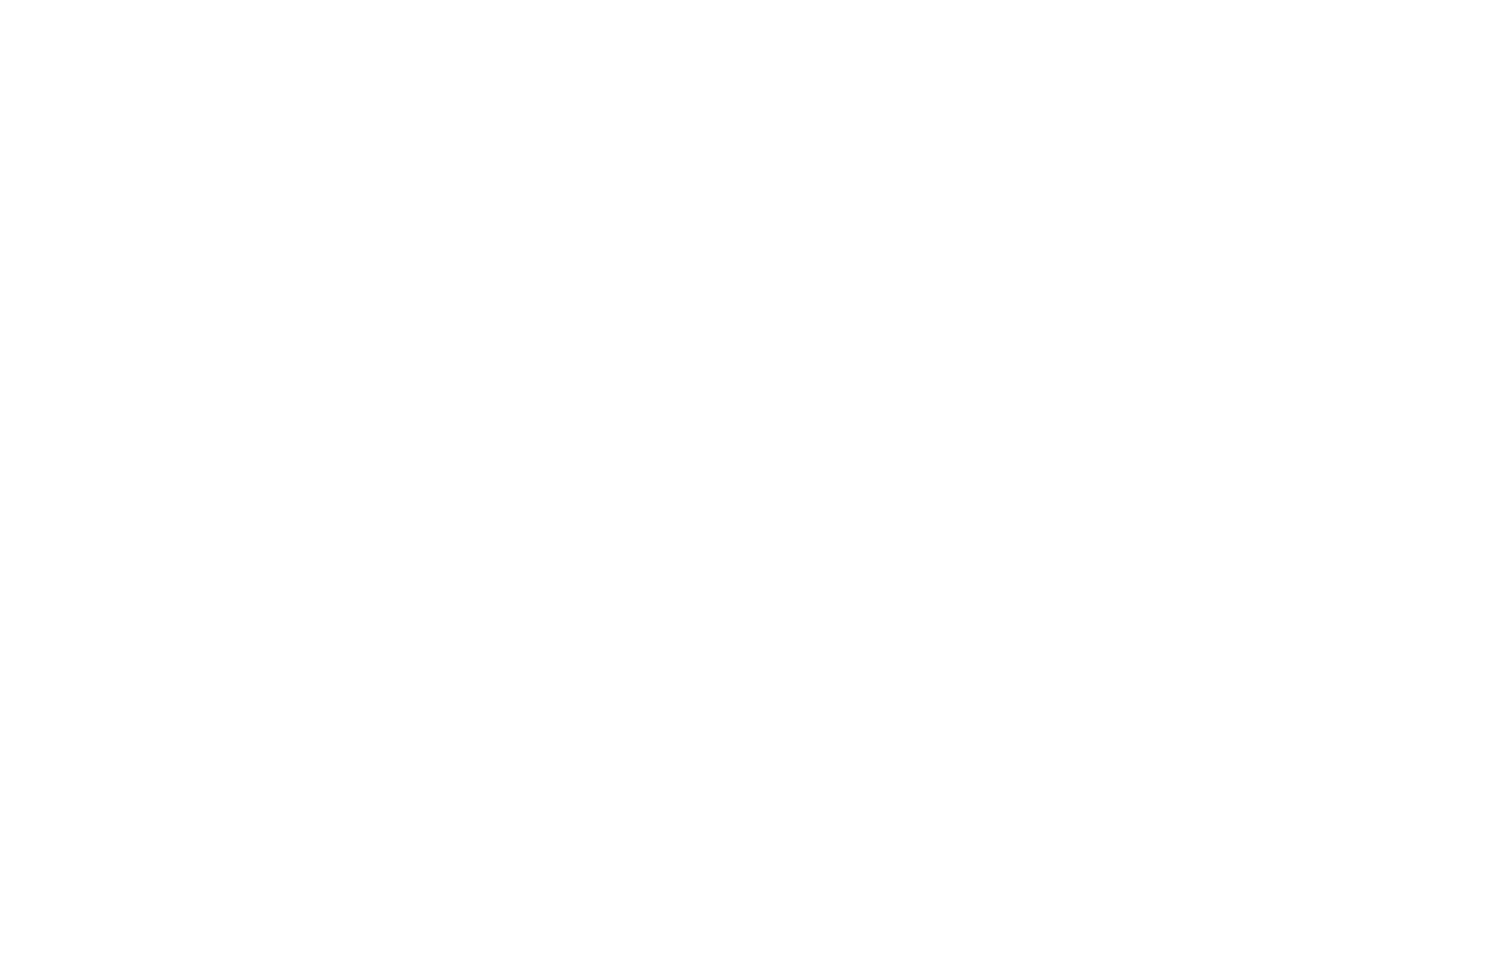 HEEROMA BIOMEDICAL